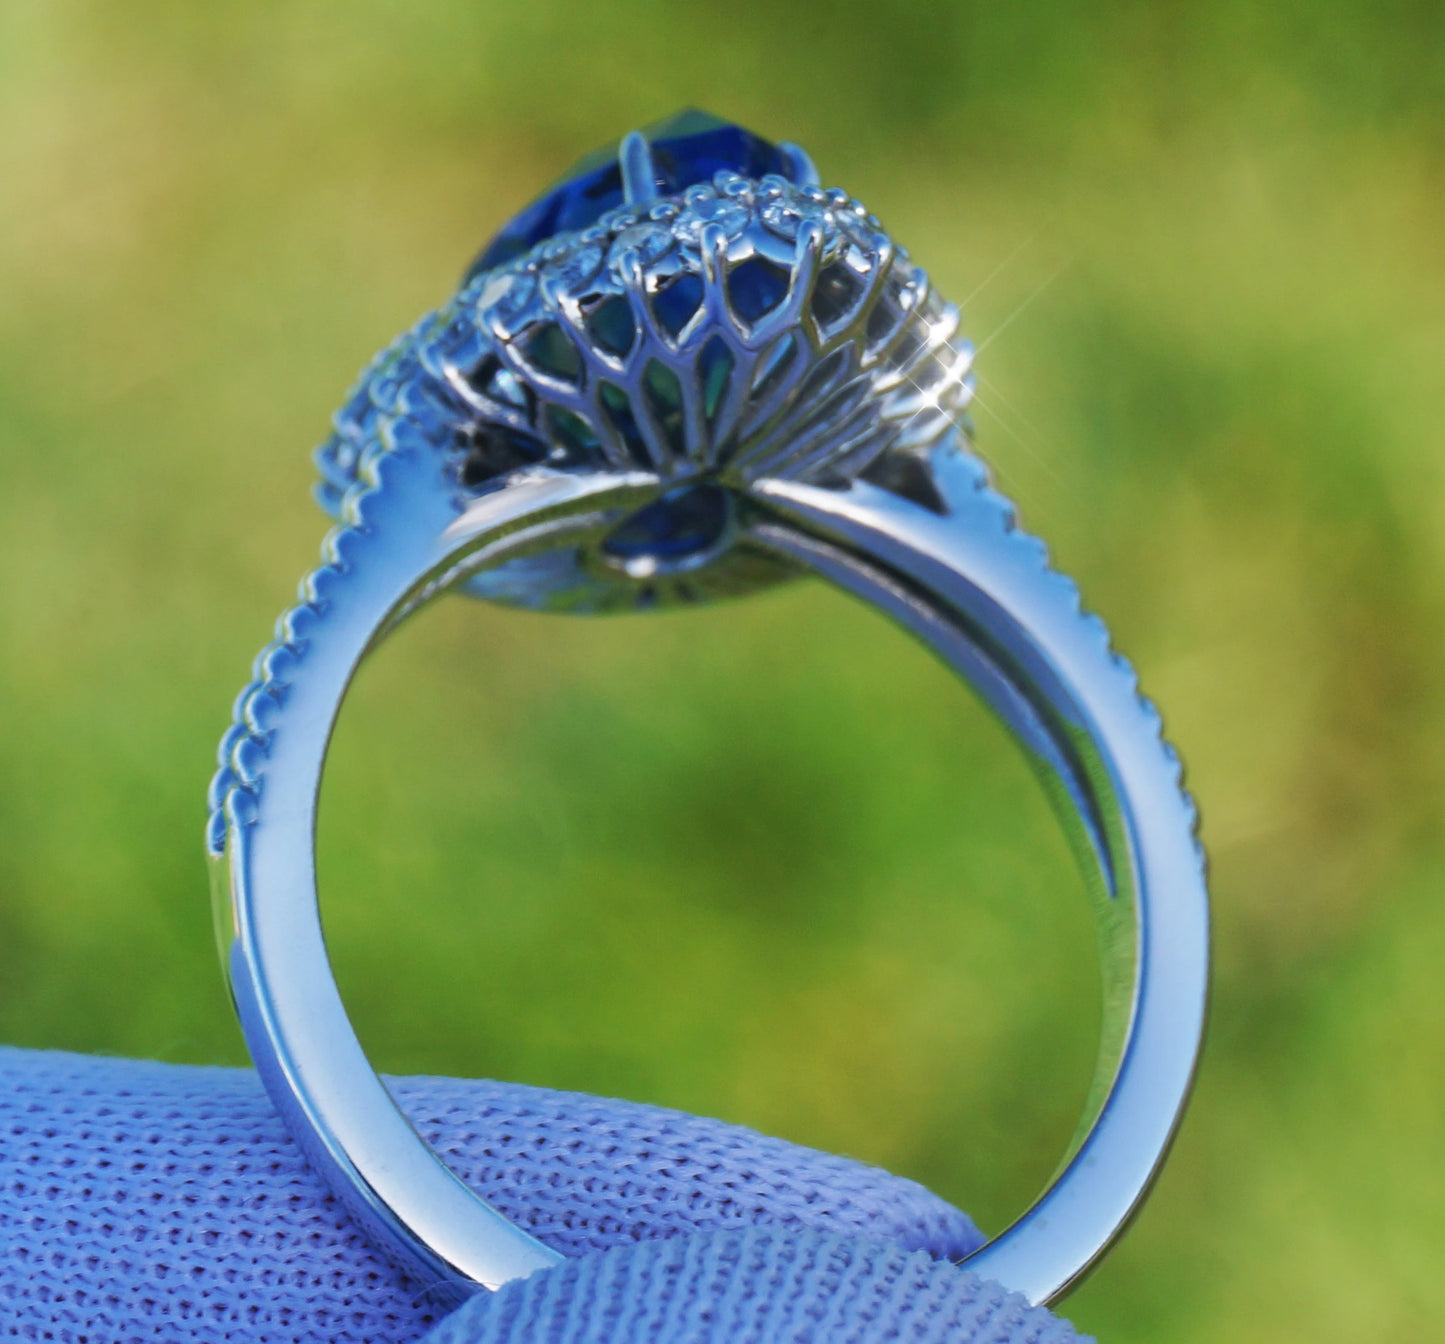 Sapphire diamond ring 14k gold no heat blue ceylon pear cut 5.39cyw gia certified